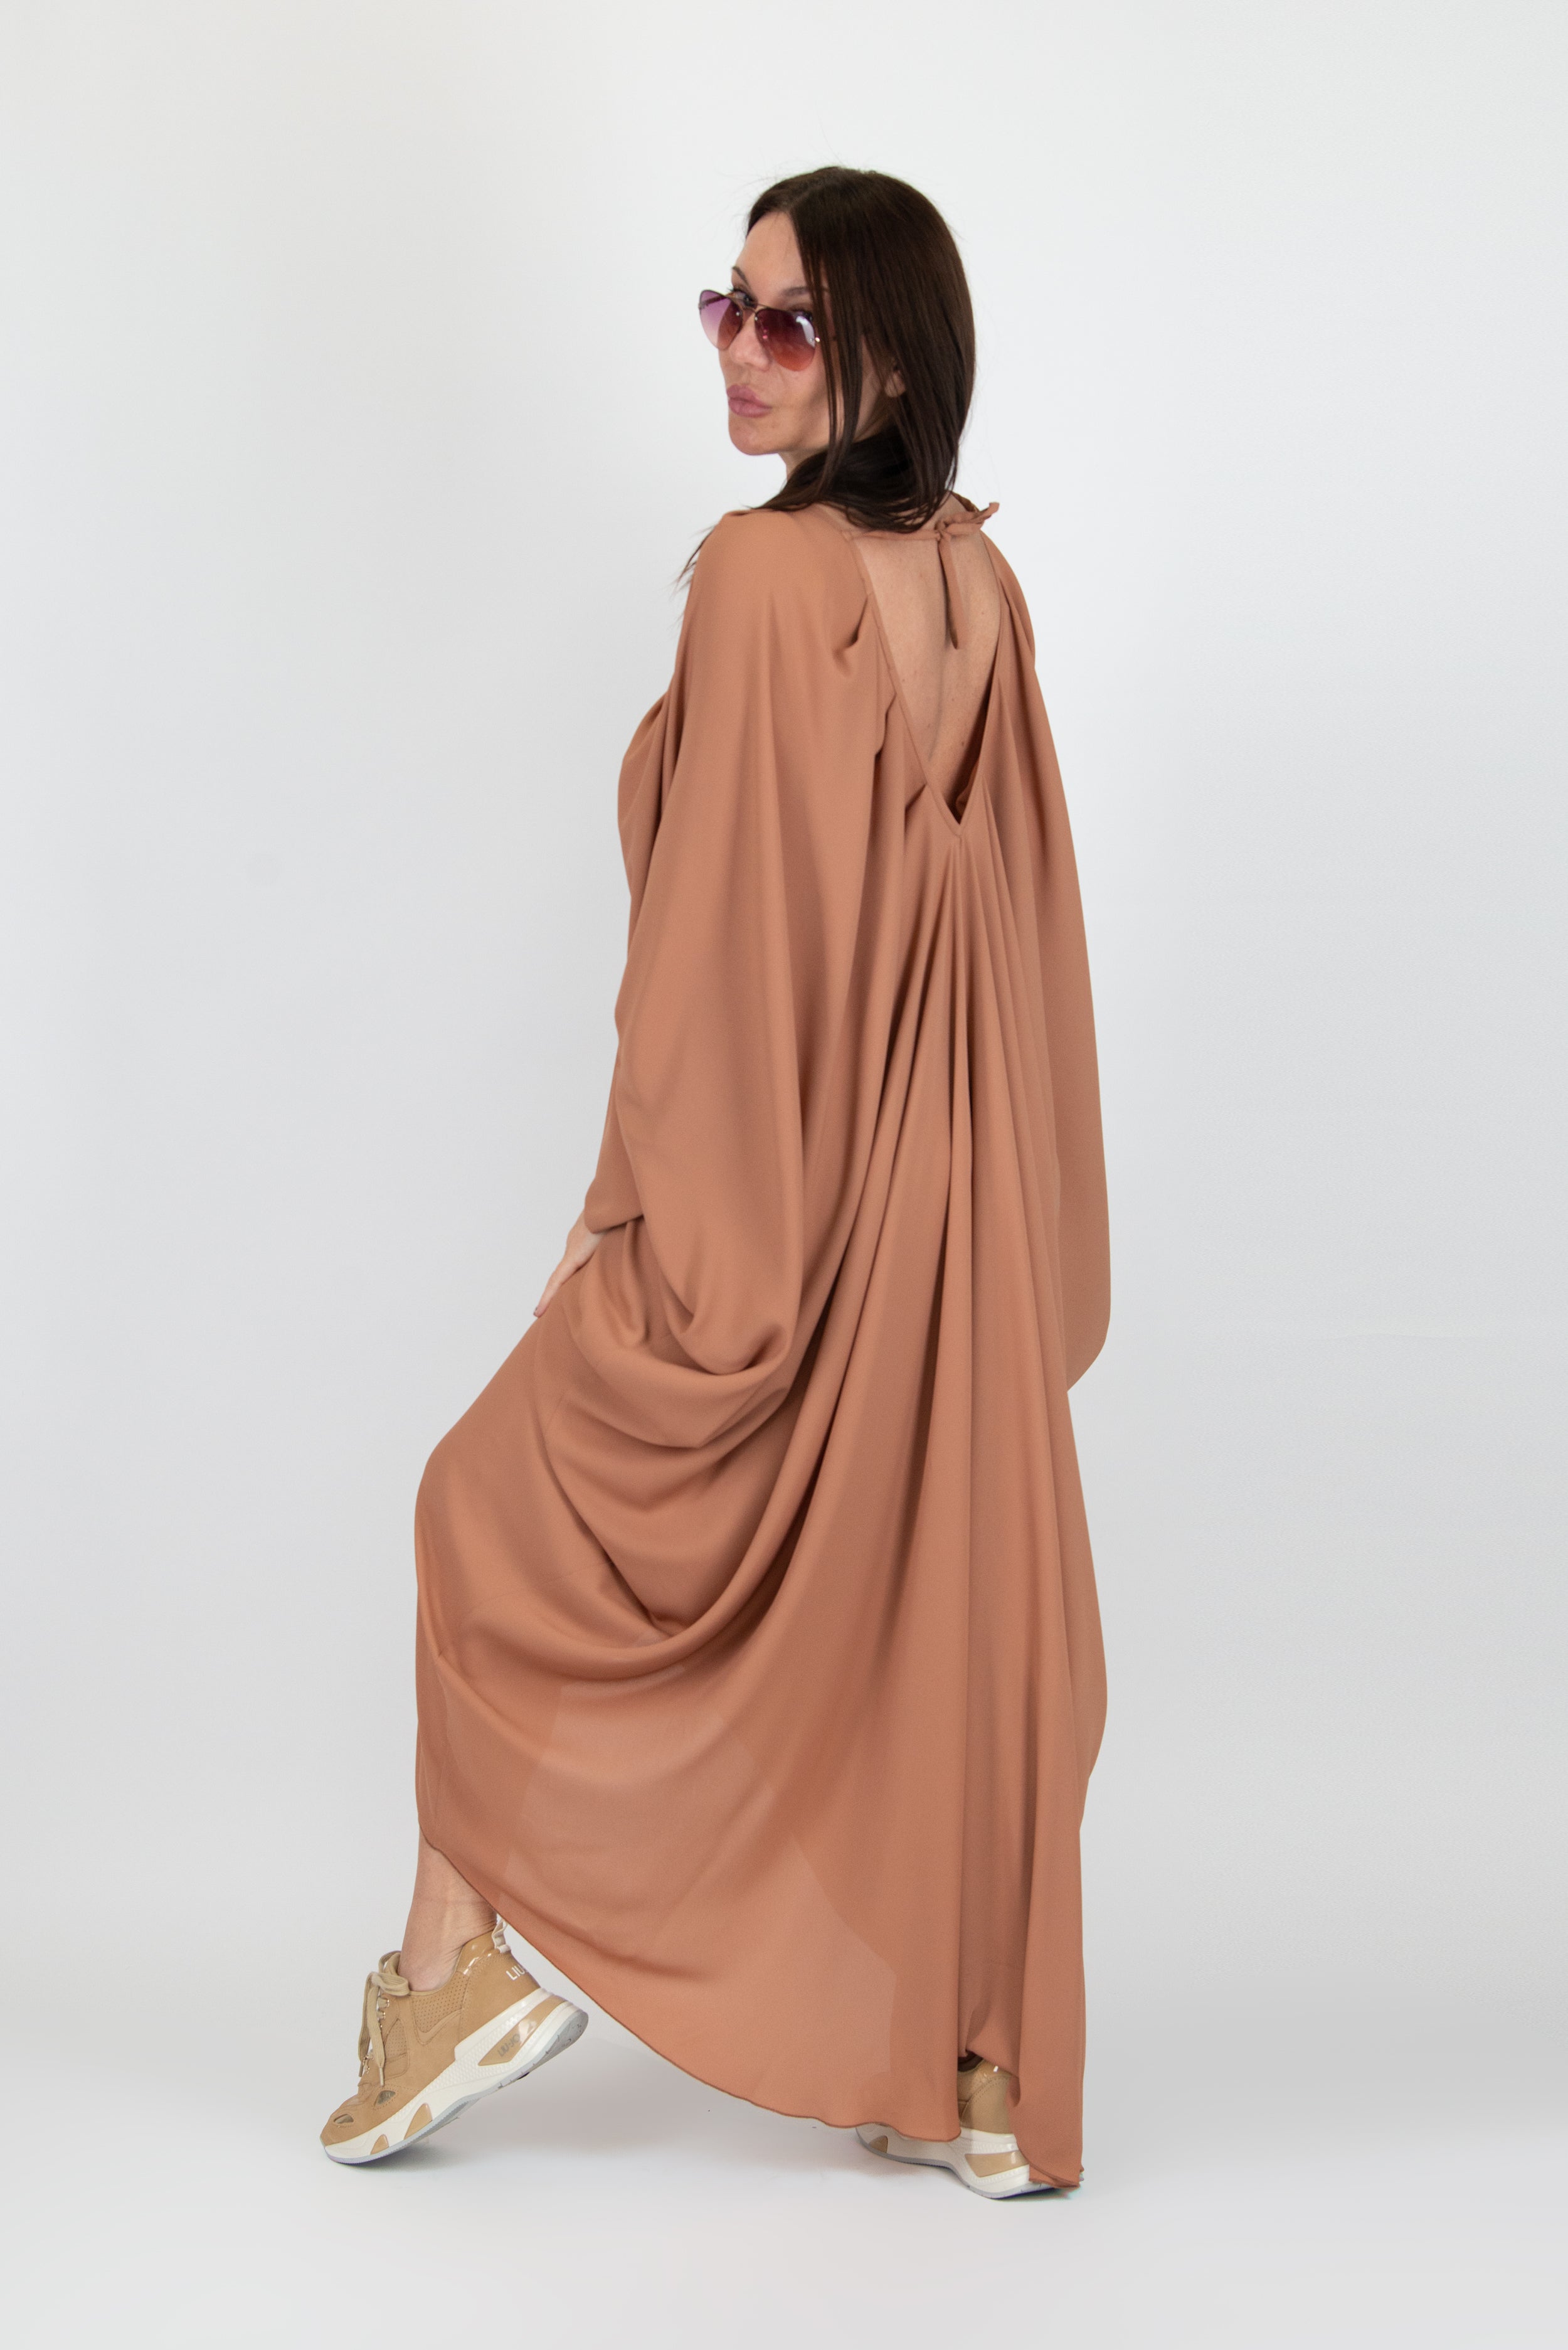 Nude Long Women Kaftan Dress by EUG Fashion